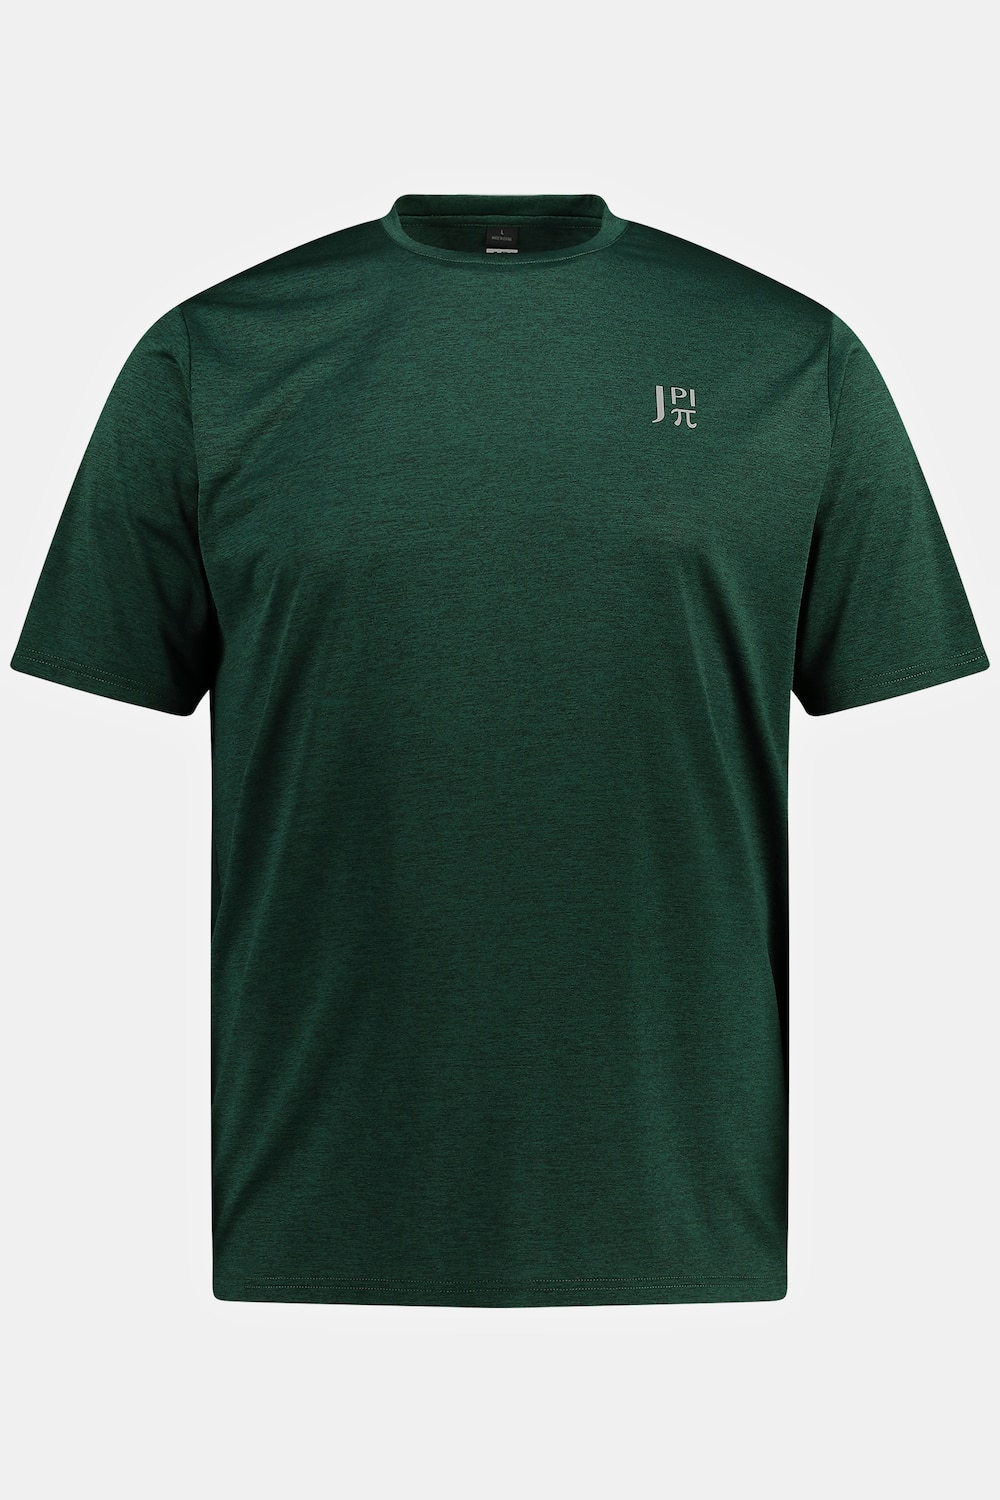 Grote Maten JAY-PI functioneel shirt FLEXNAMIC®male, groen, Maat: 3XL, Polyester, JAY-PI